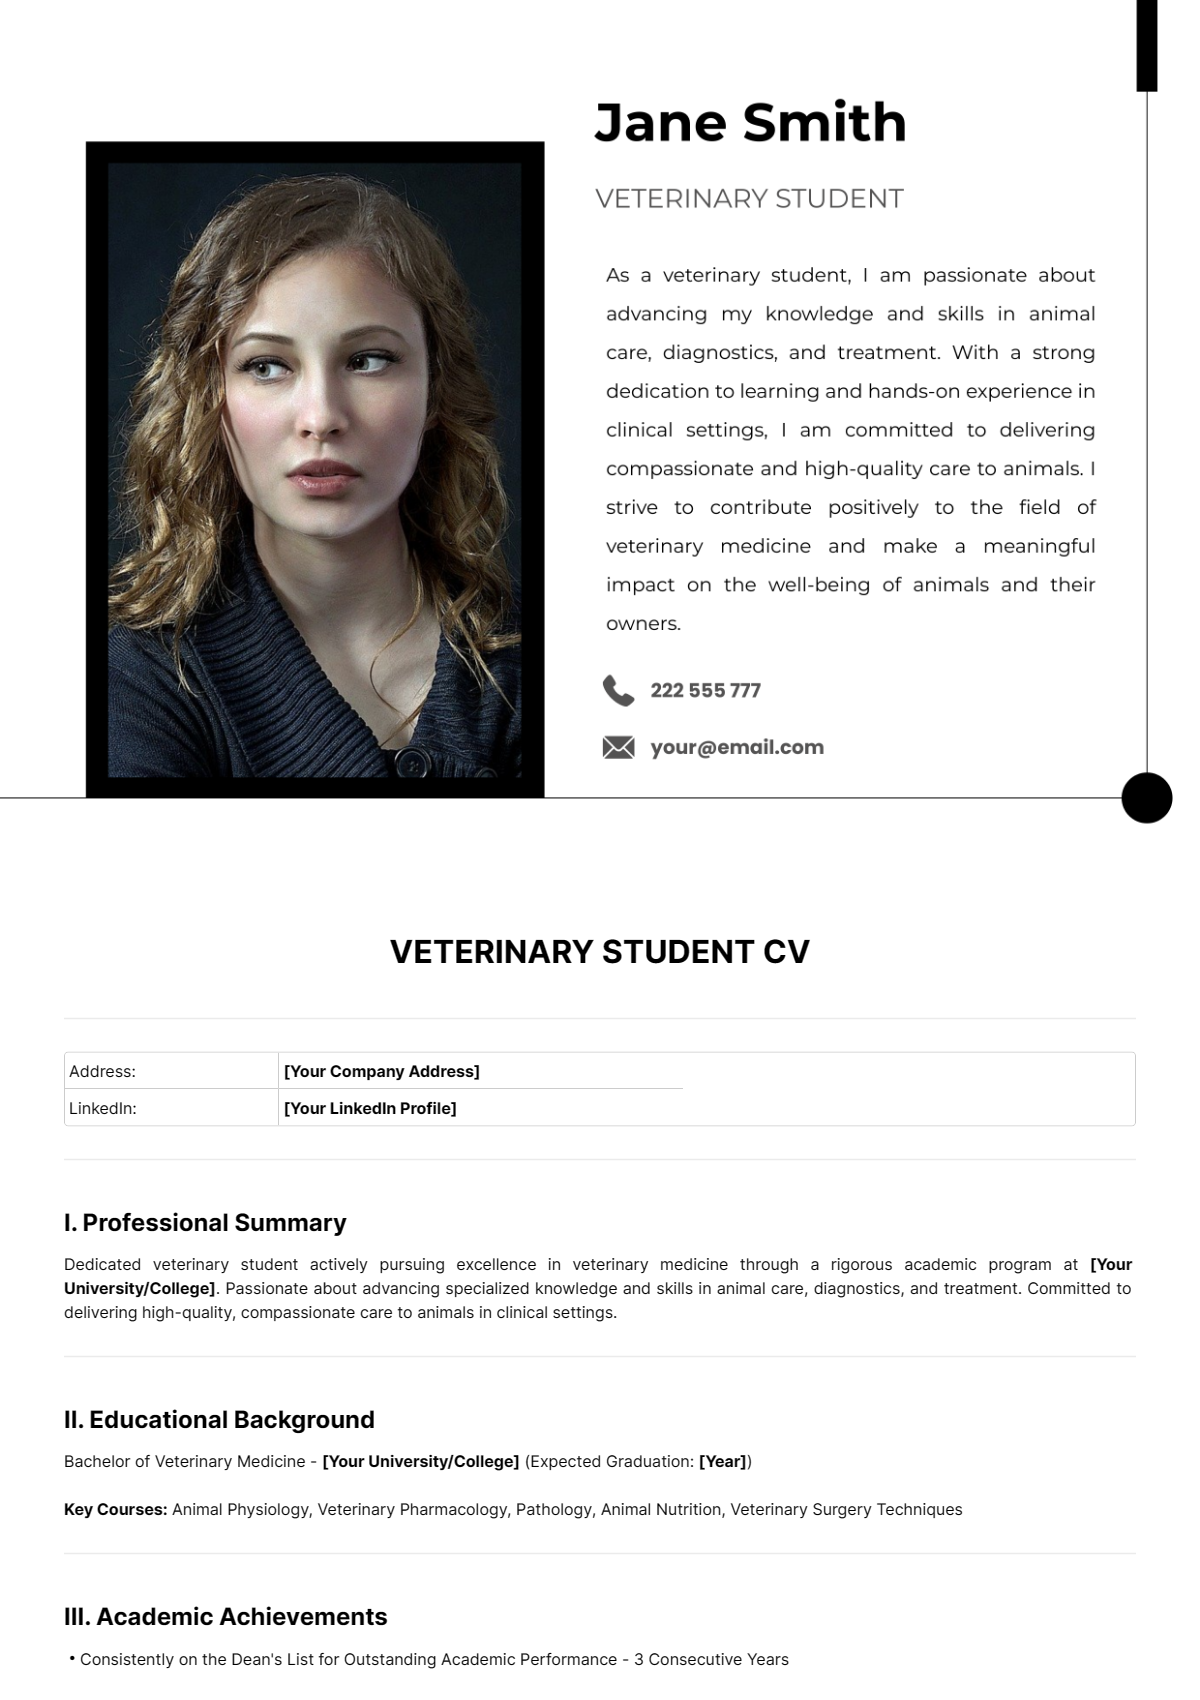 Free Veterinary Student CV Template